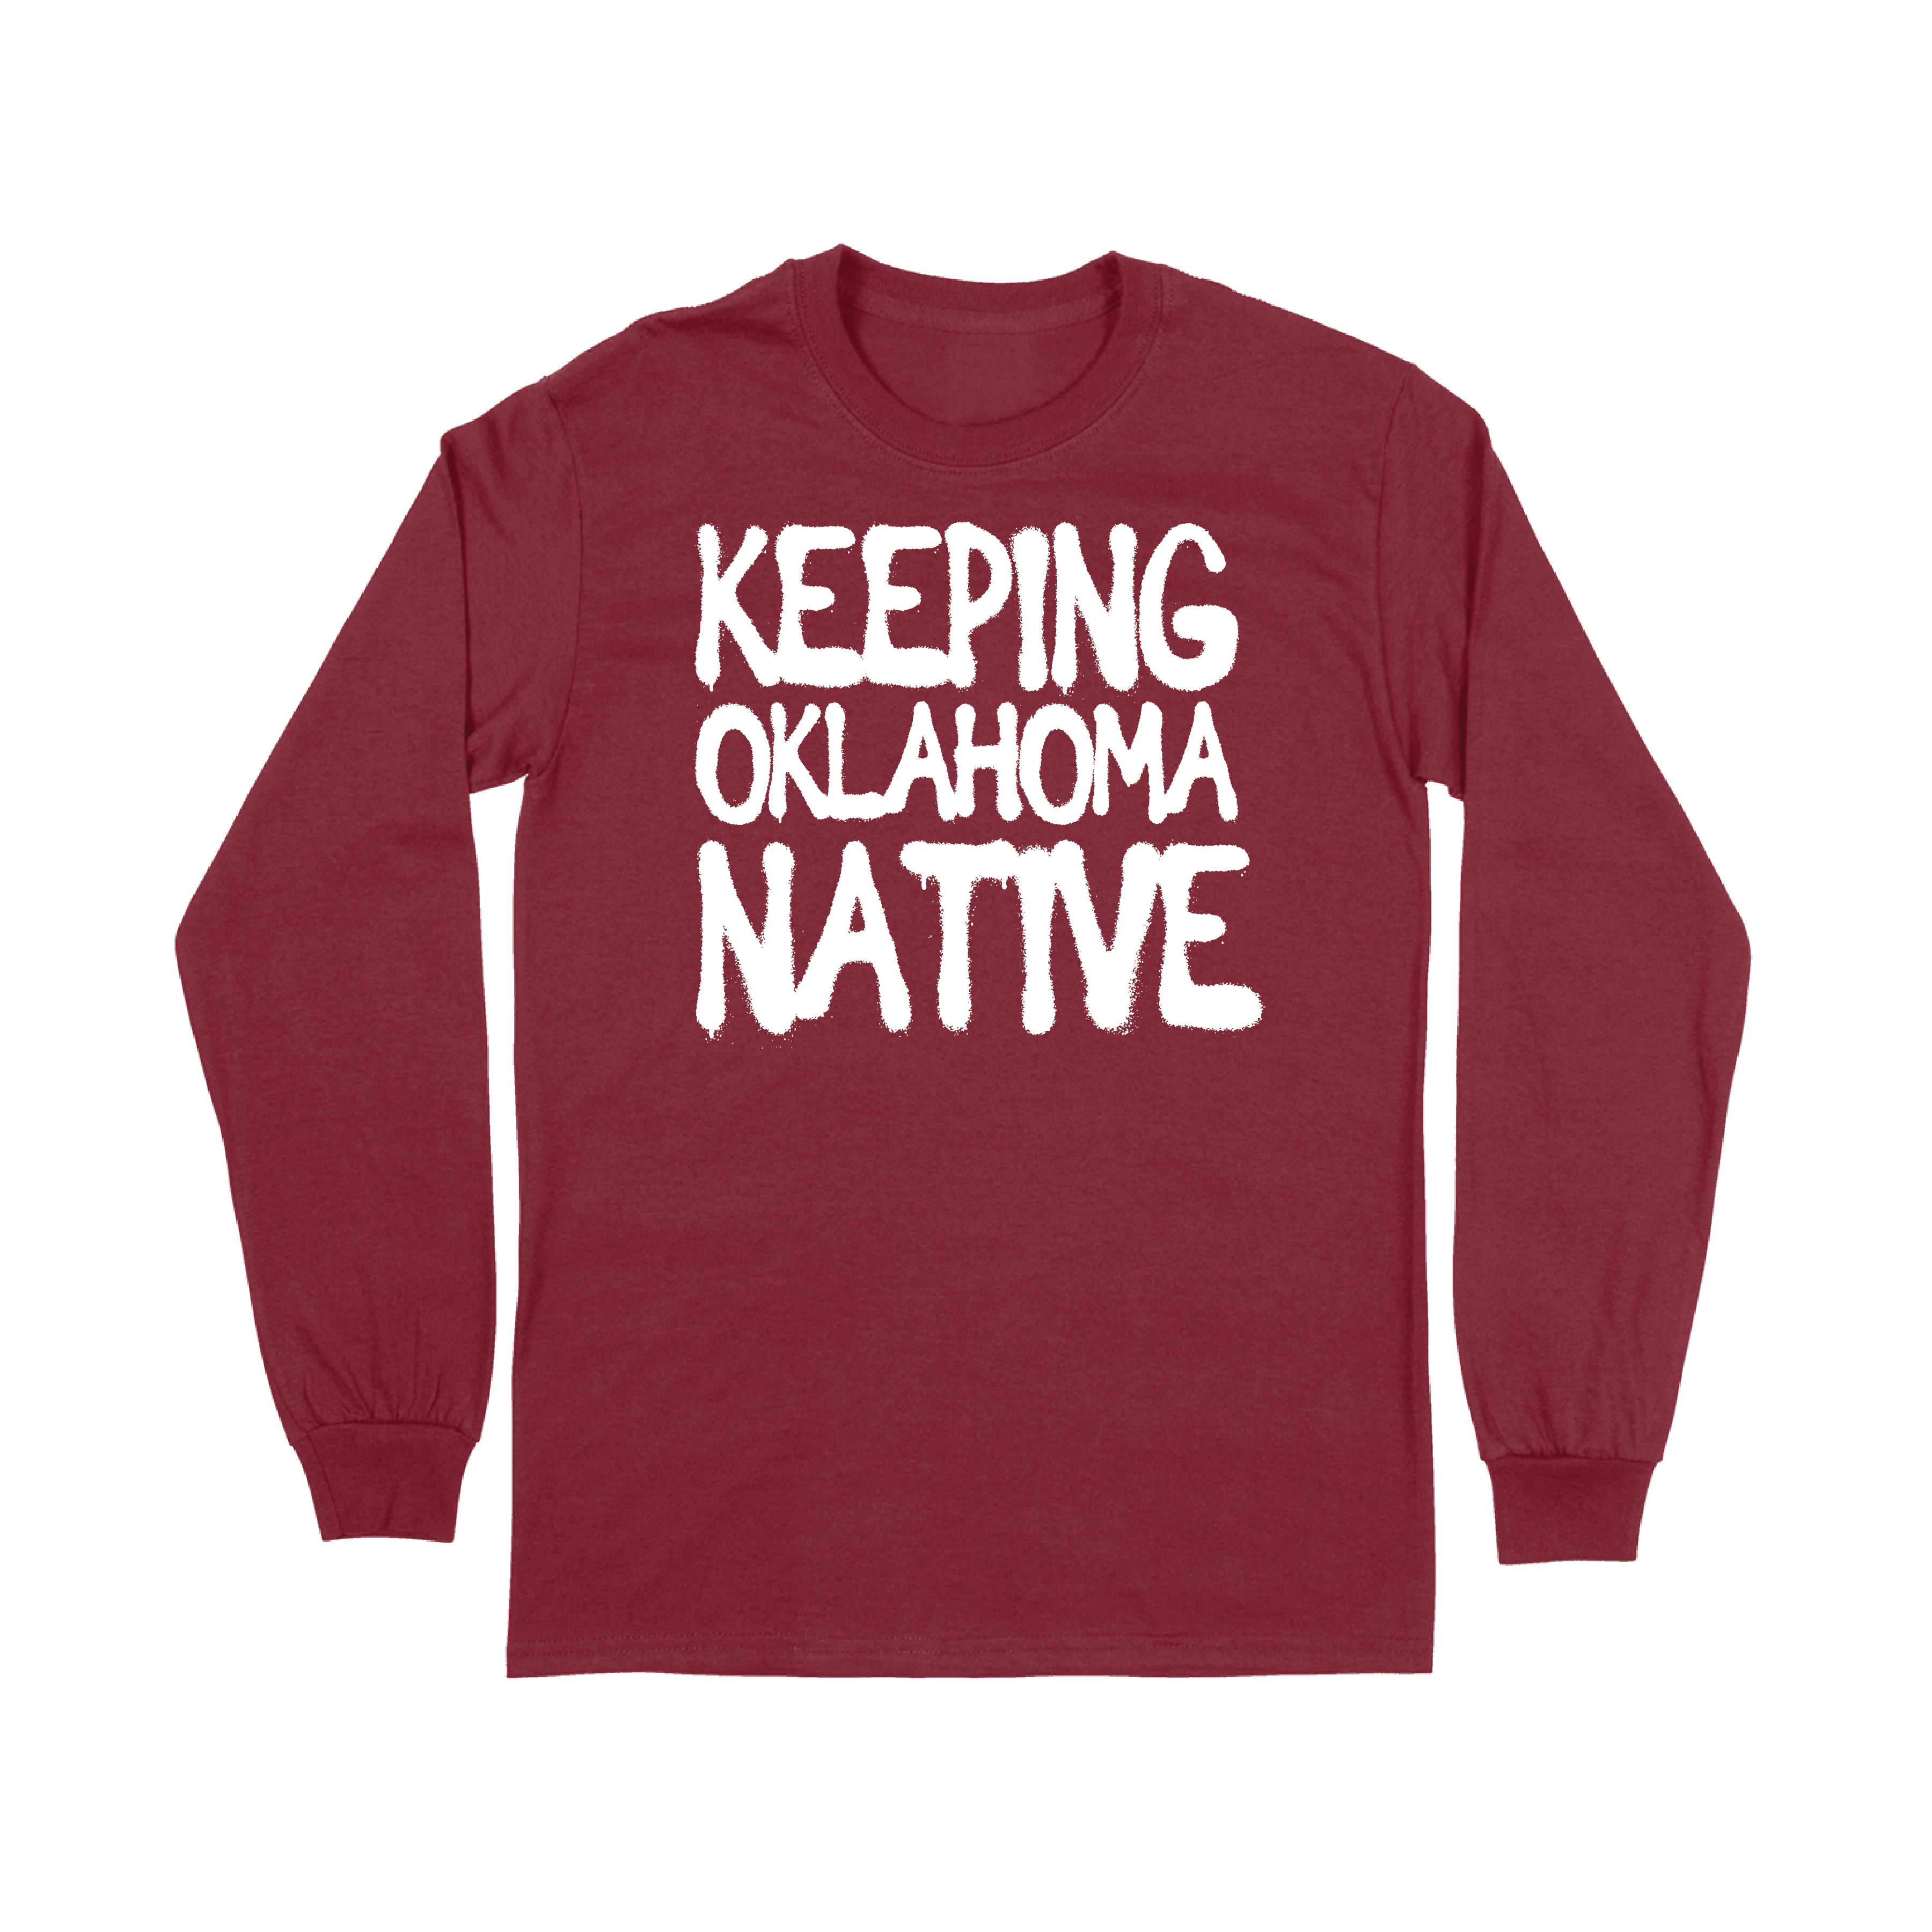 Keeping Oklahoma Native - Red/Long sleeve